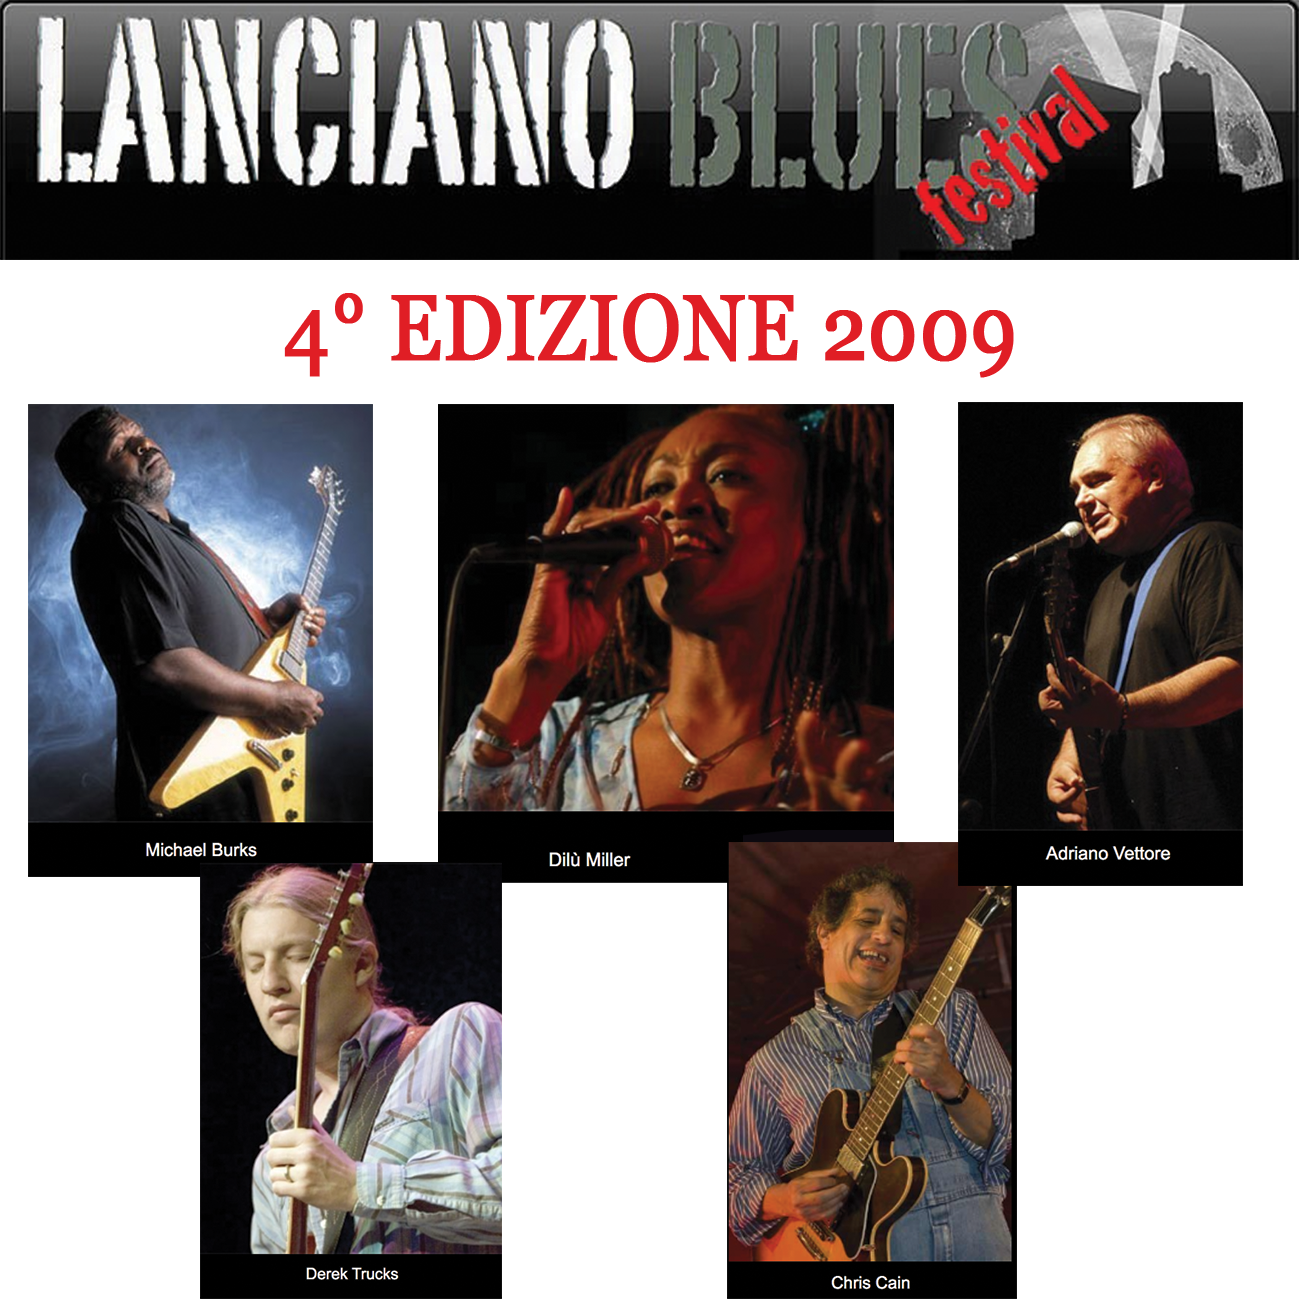 LANCIANO BLUES FESTIVAL 2009